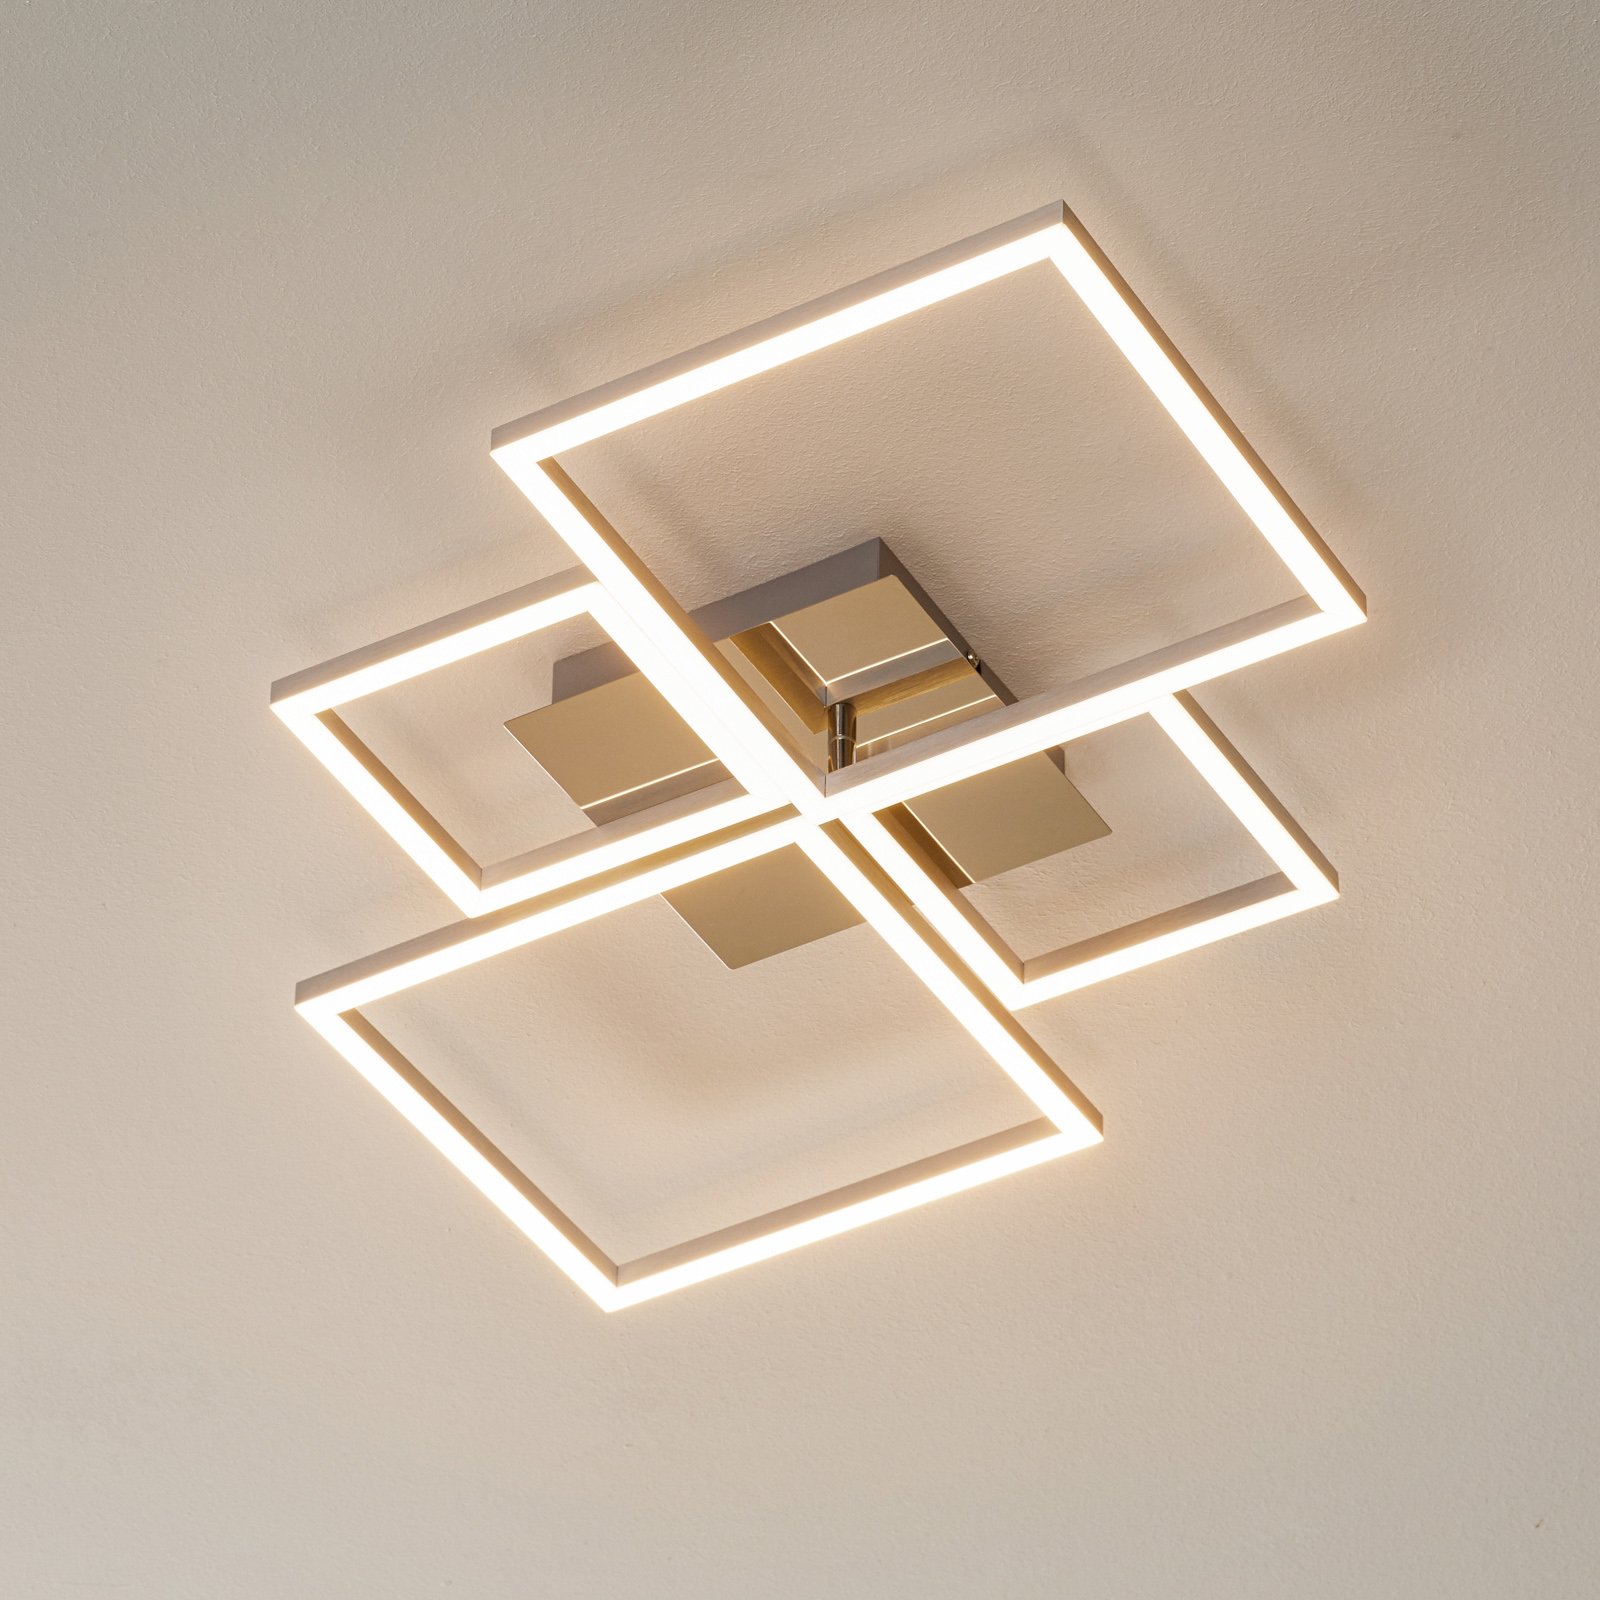 Plafoniera Frame LED, dimmerabile tramite interruttore a parete